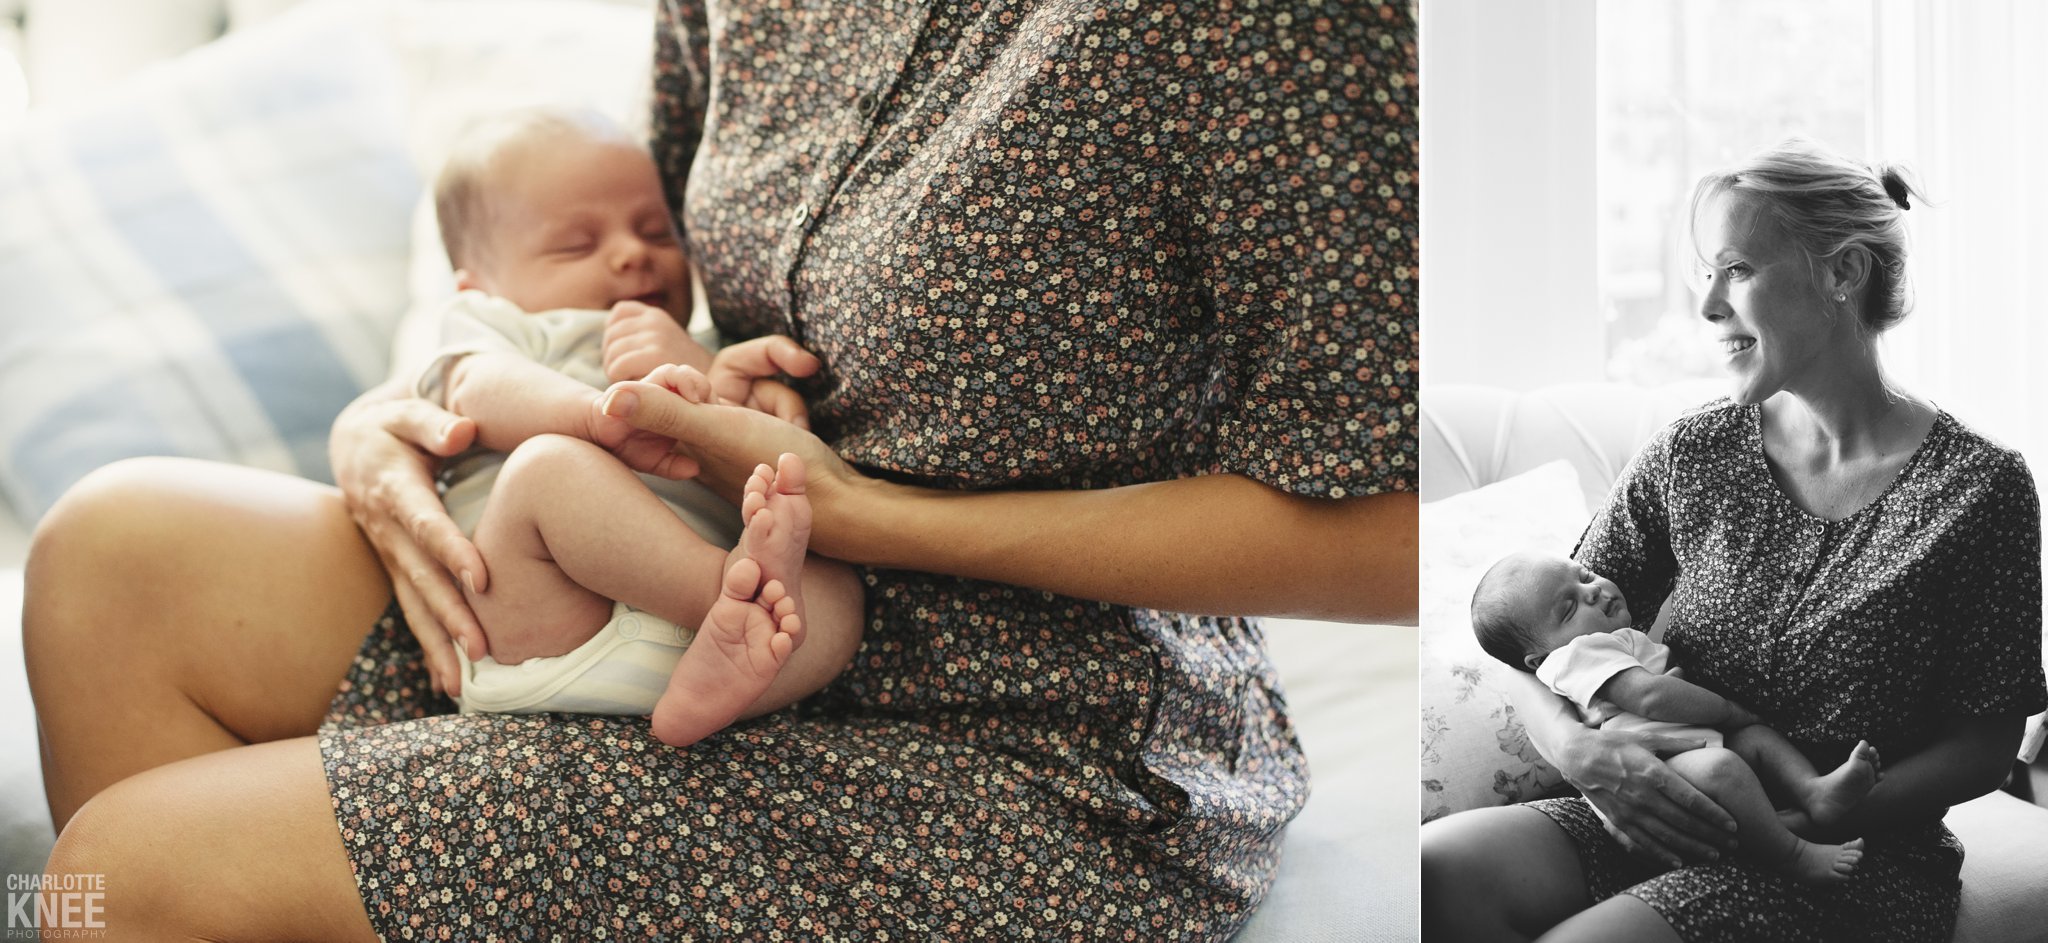 Newborn-Photography-Baby-Milo-Charlotte-Knee-Photography_0005.jpg